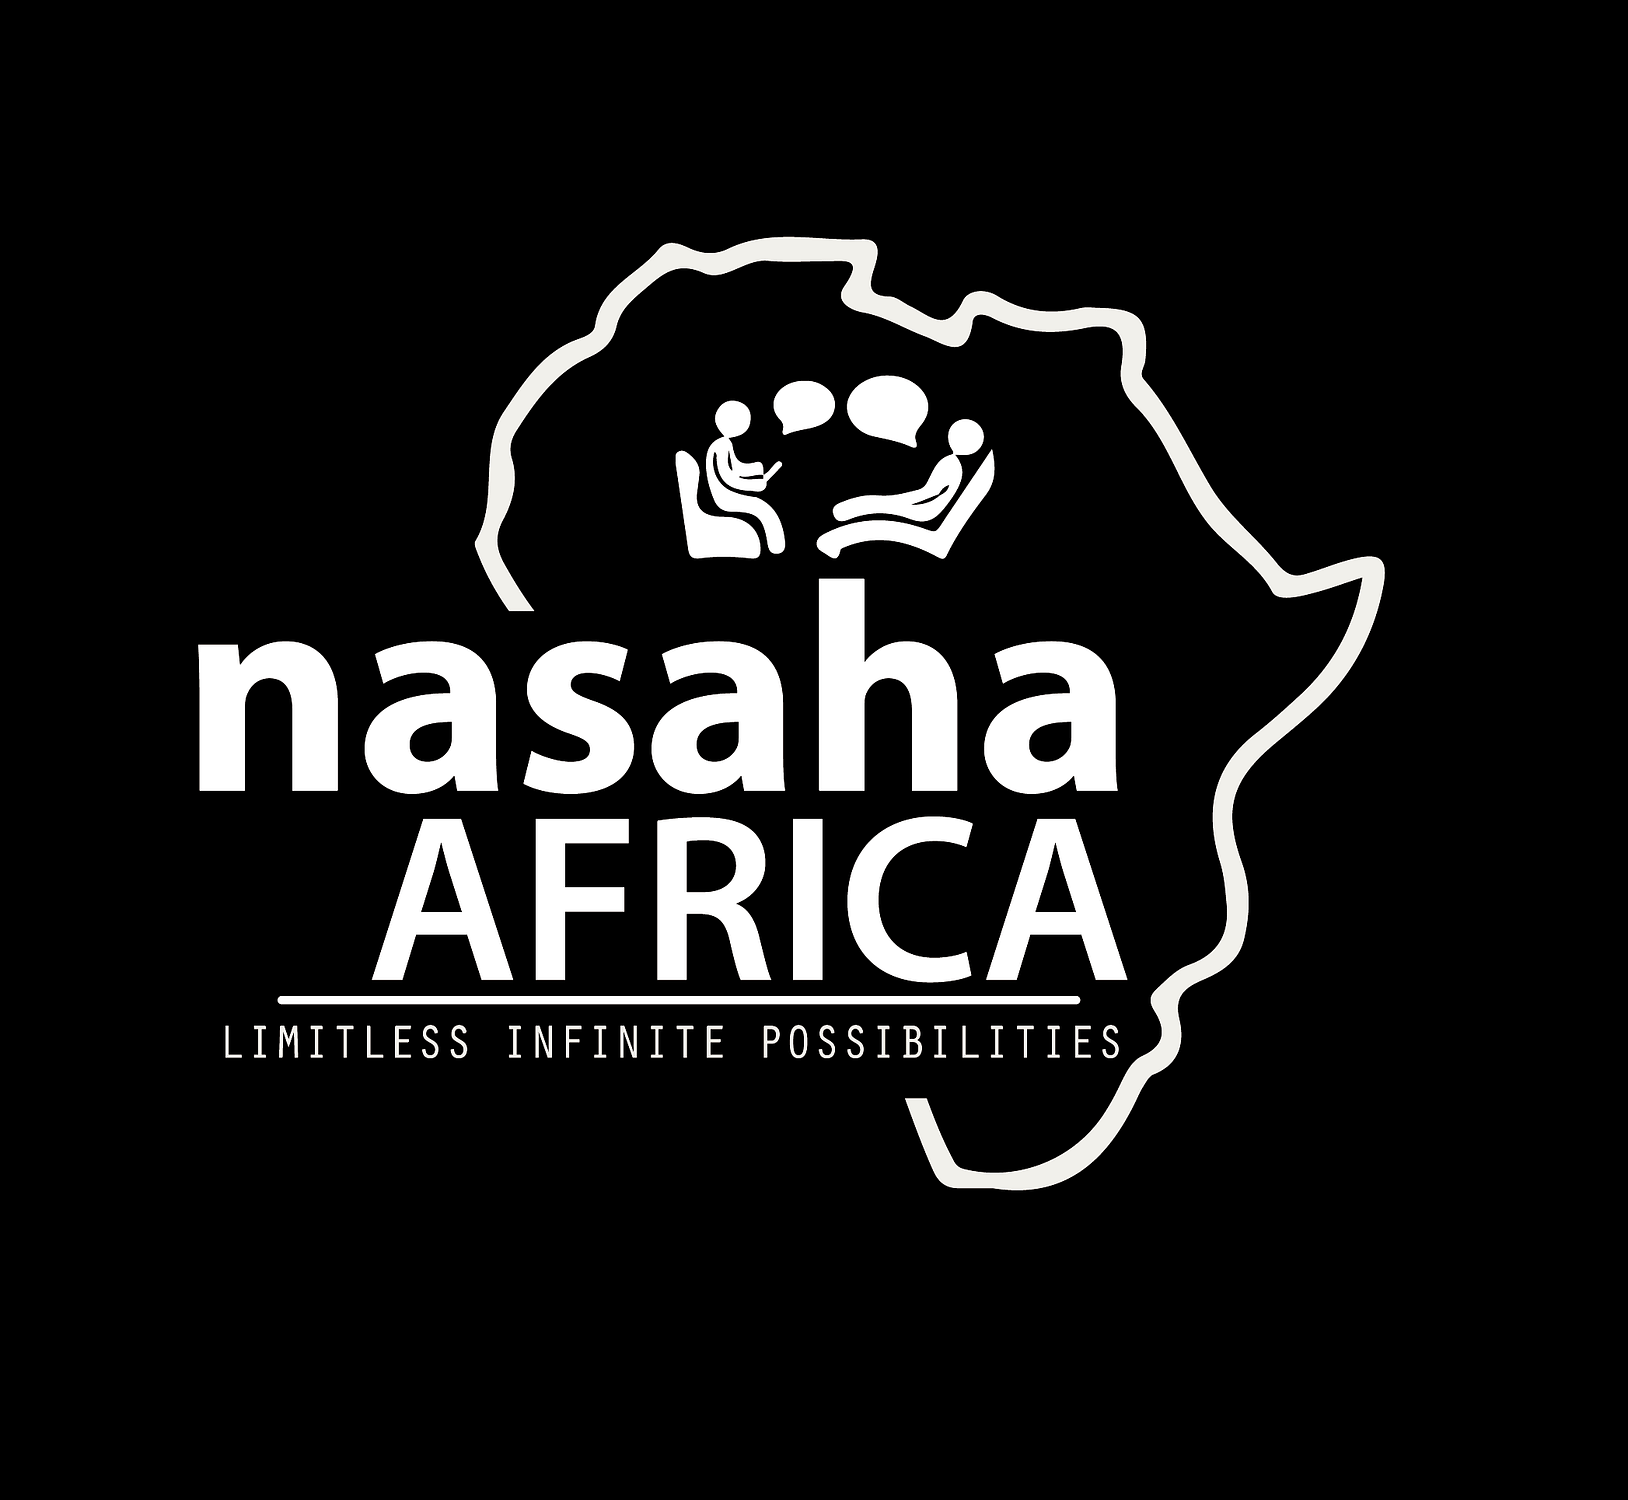 Nasahafrica